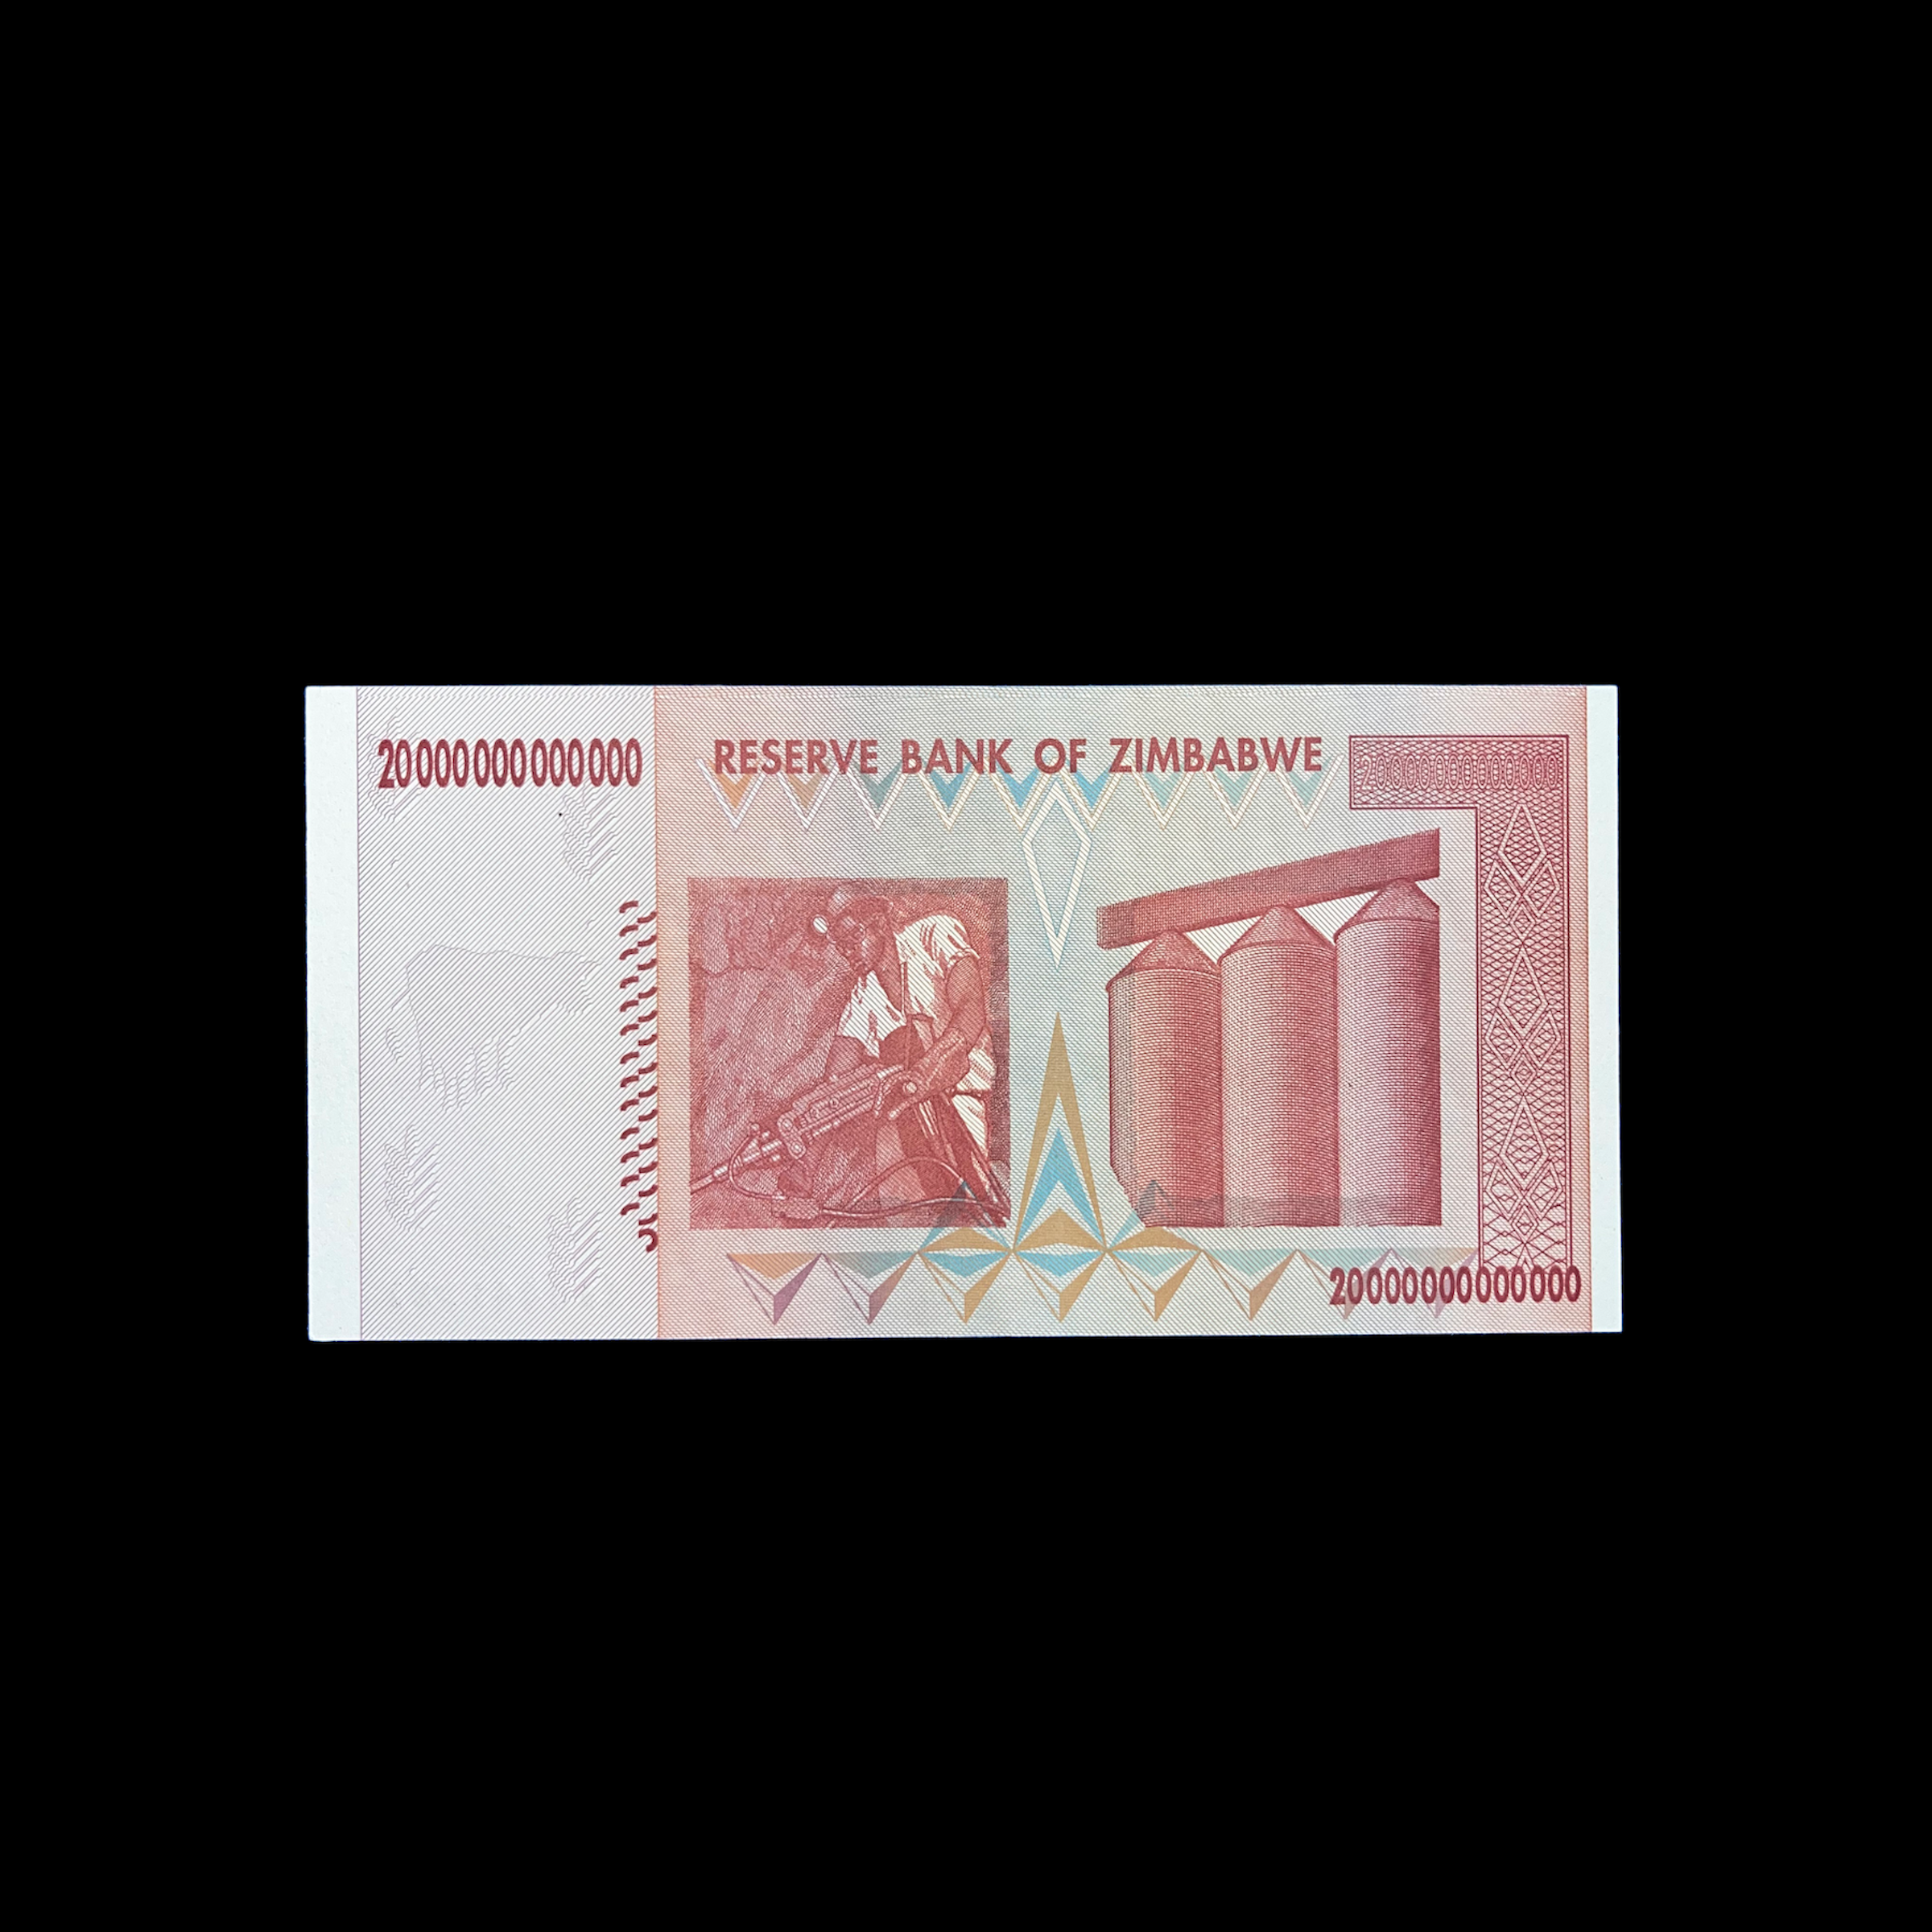 Zimbabwe-20 billones de dólares